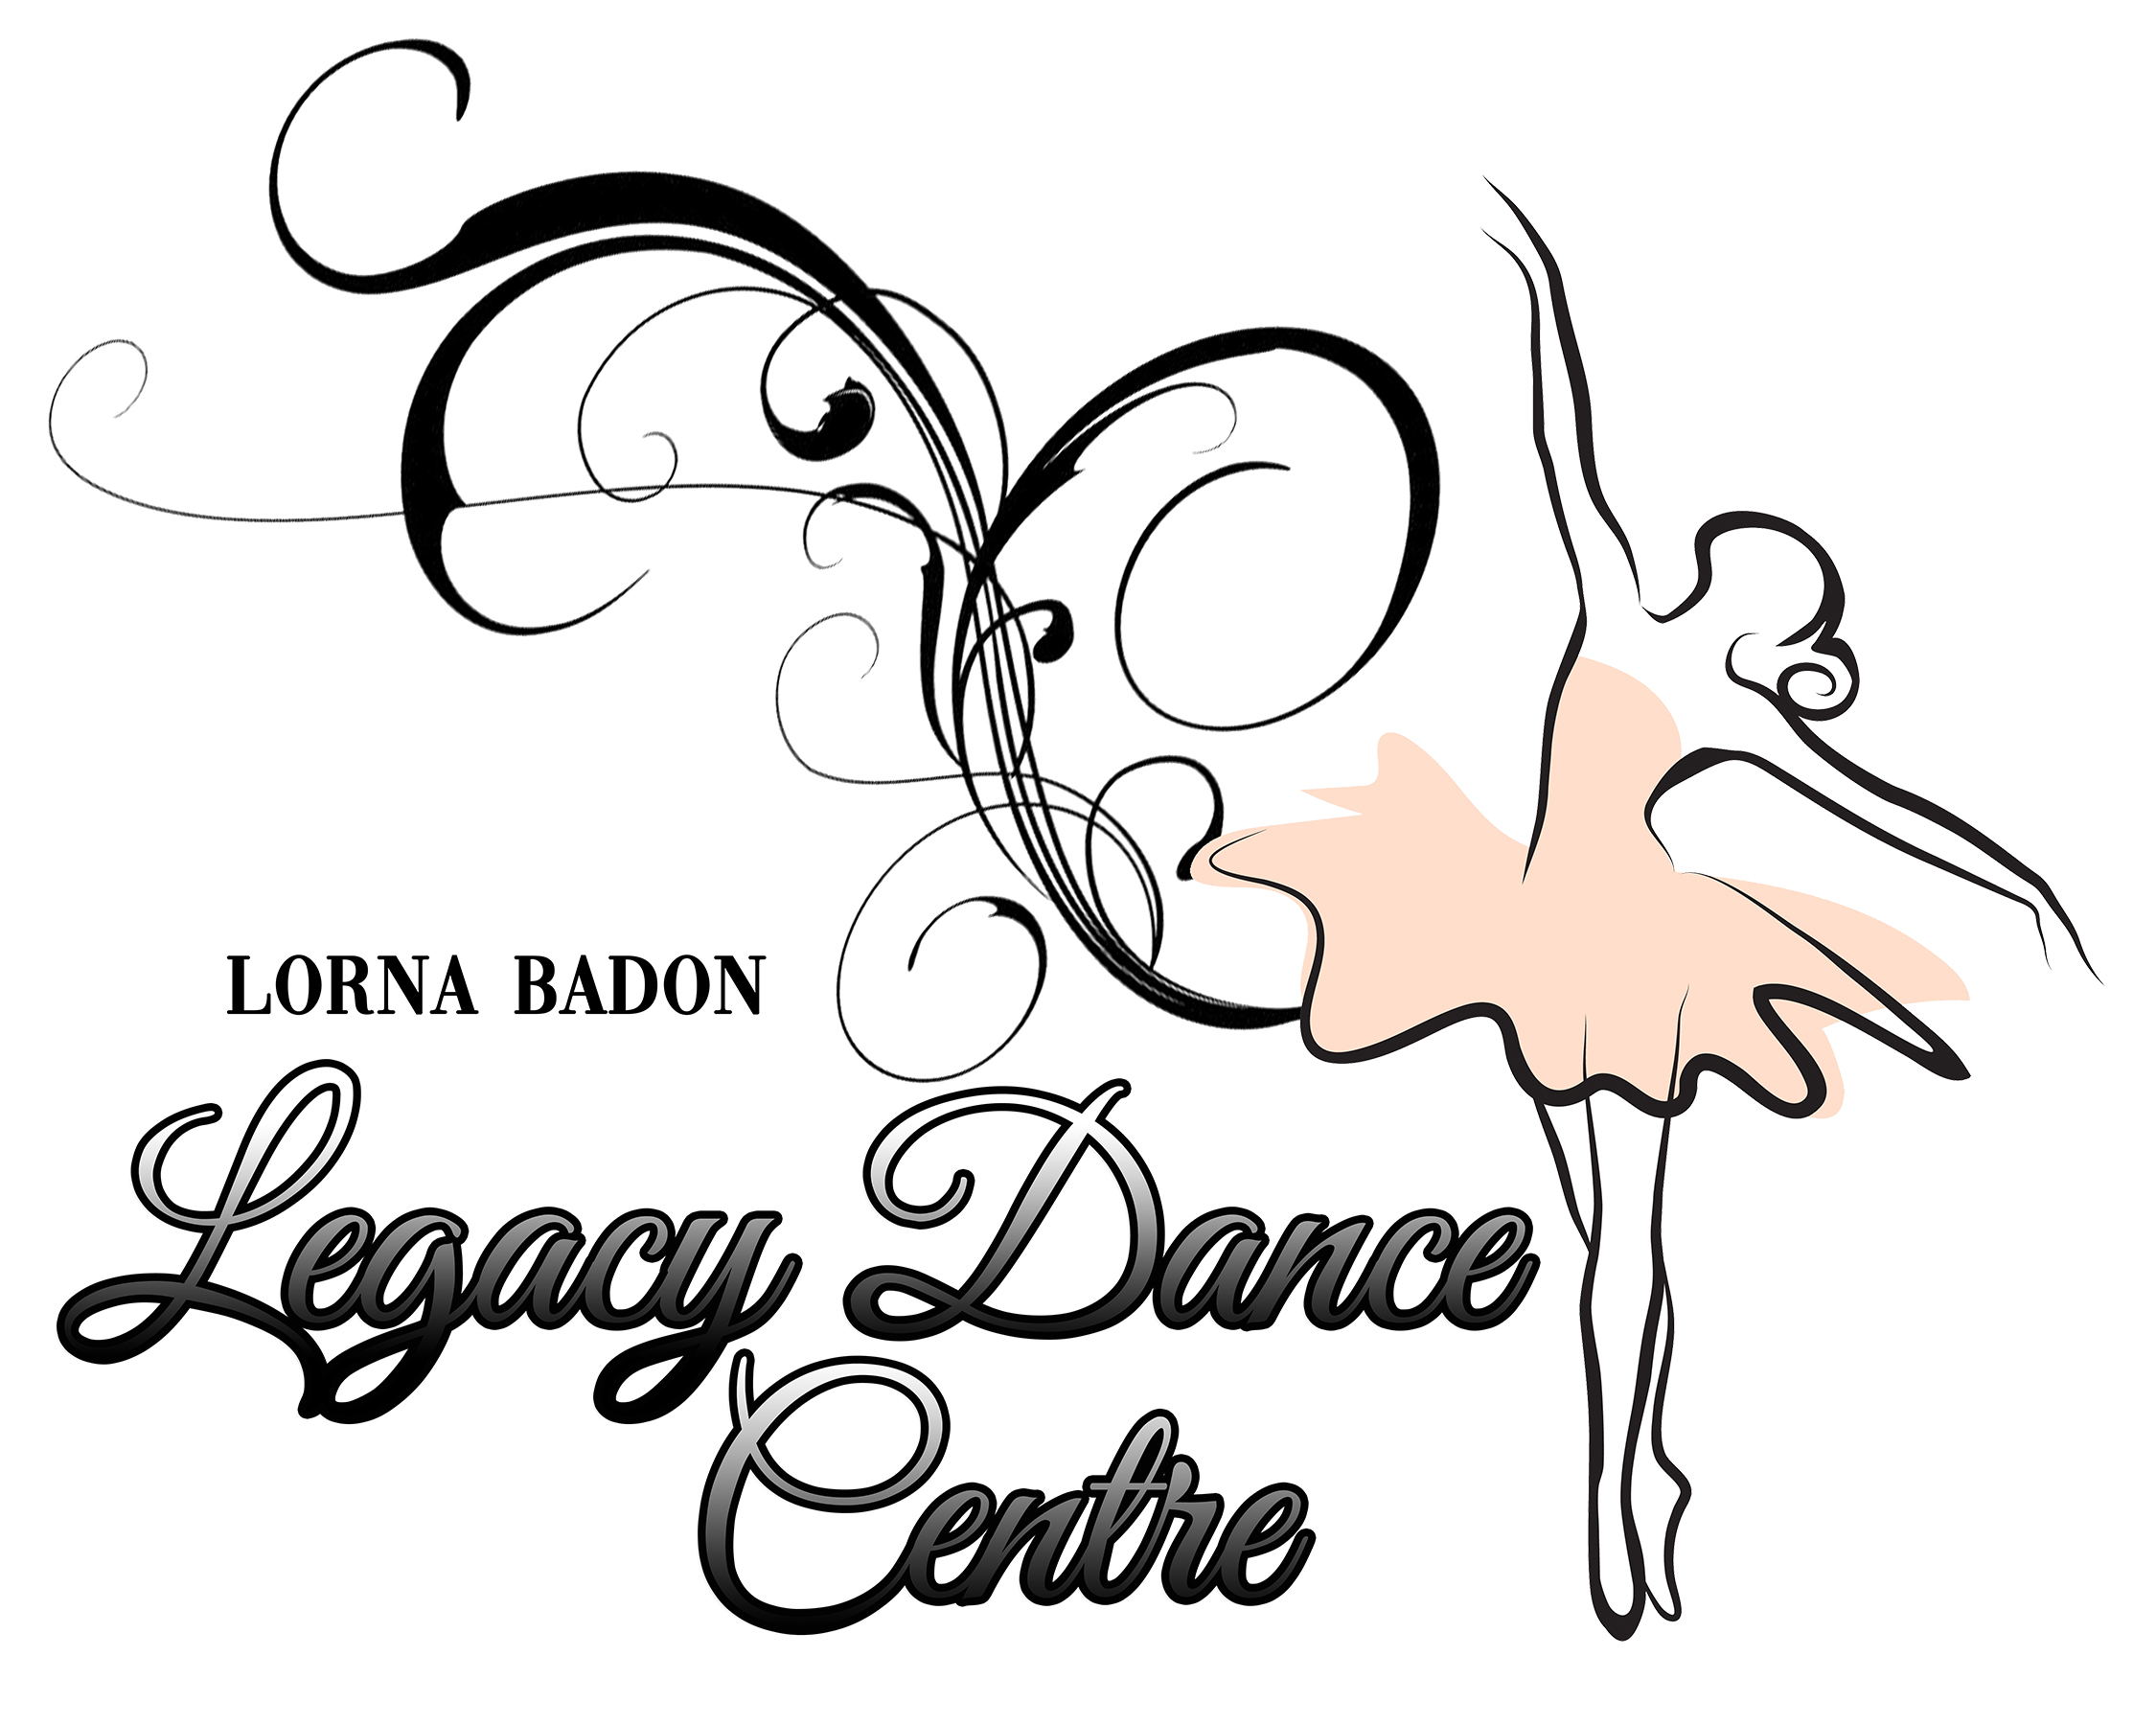 Lorna Badon Legacy Dance Centre